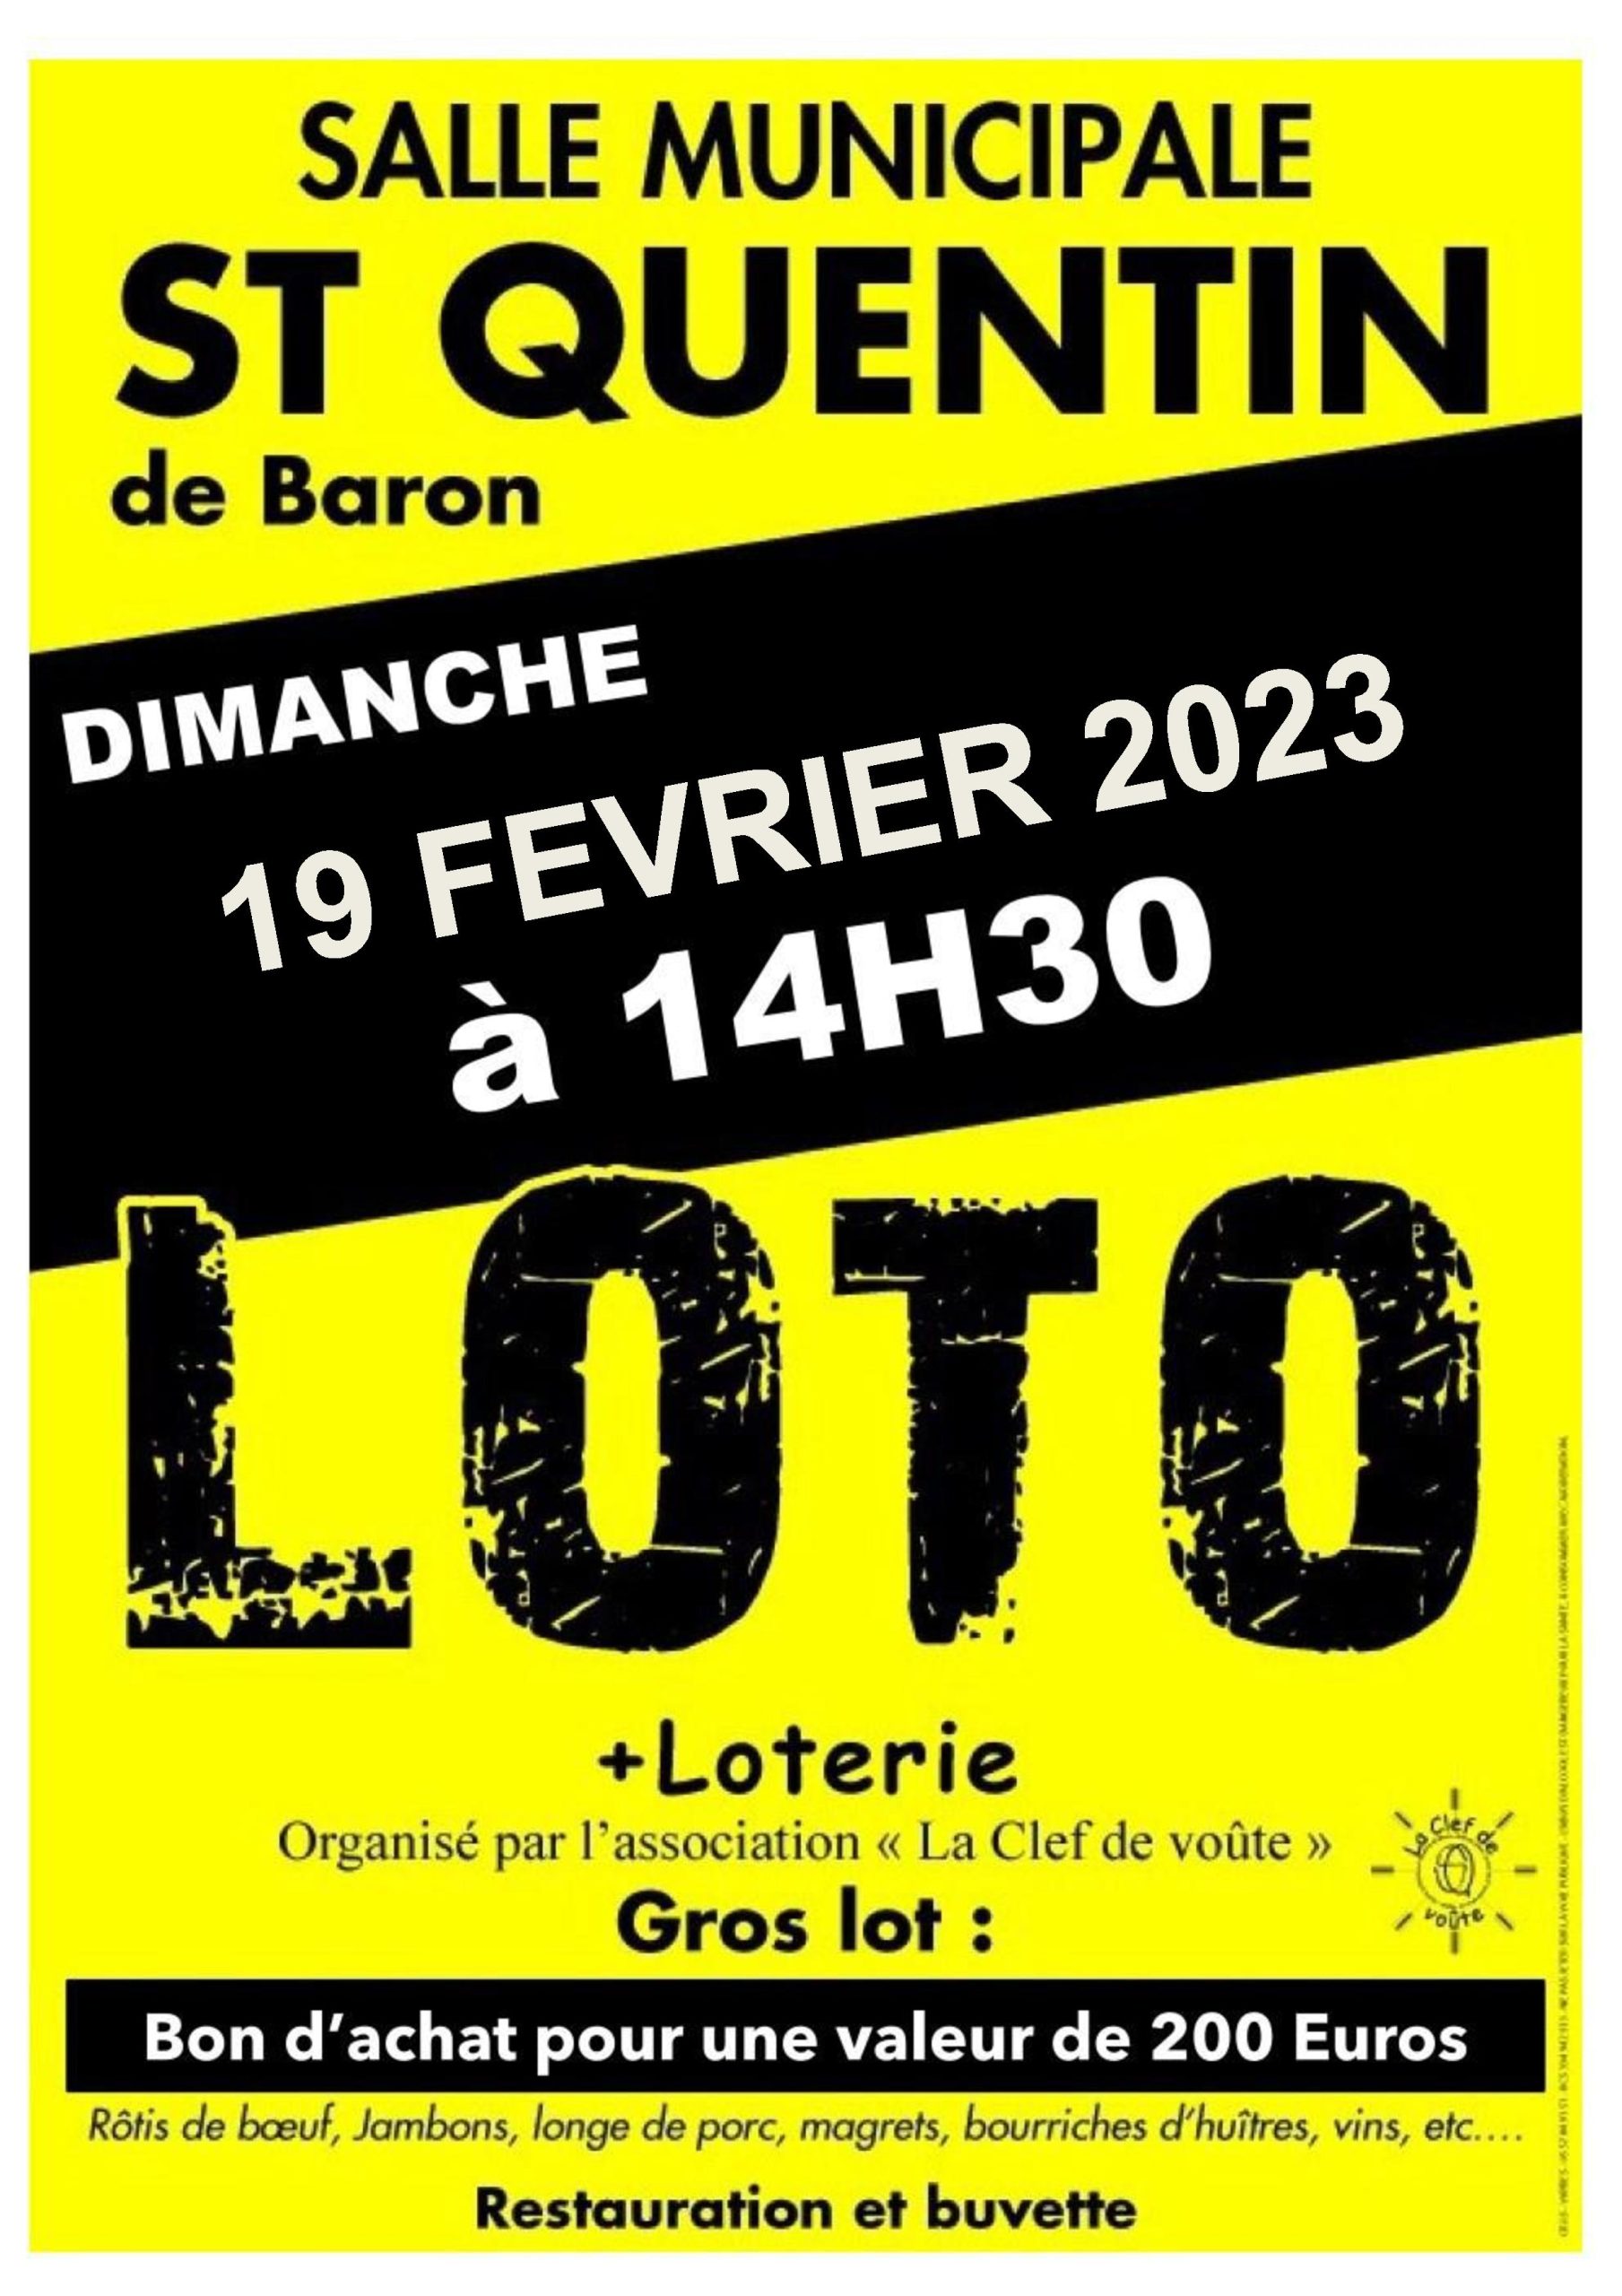 Super Loto Quine - Moÿ-de-l'Aisne